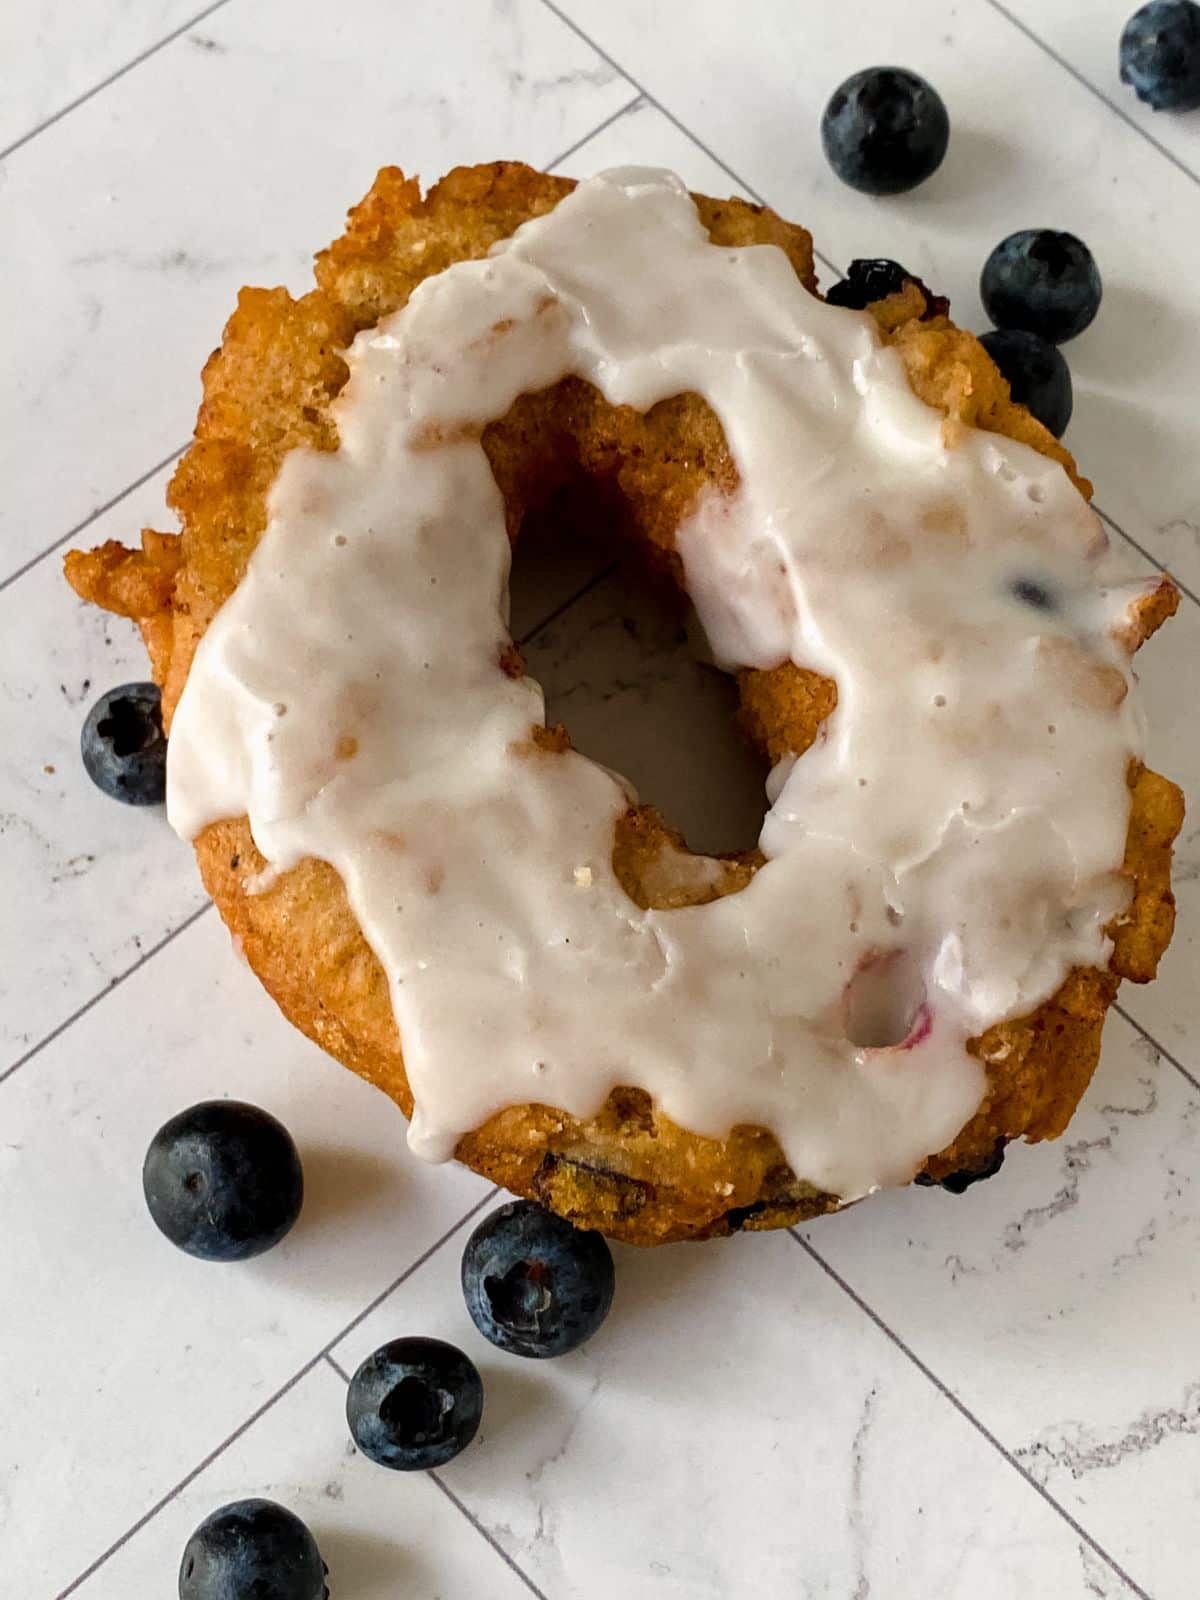 single blueberry cake donut with glaze on table